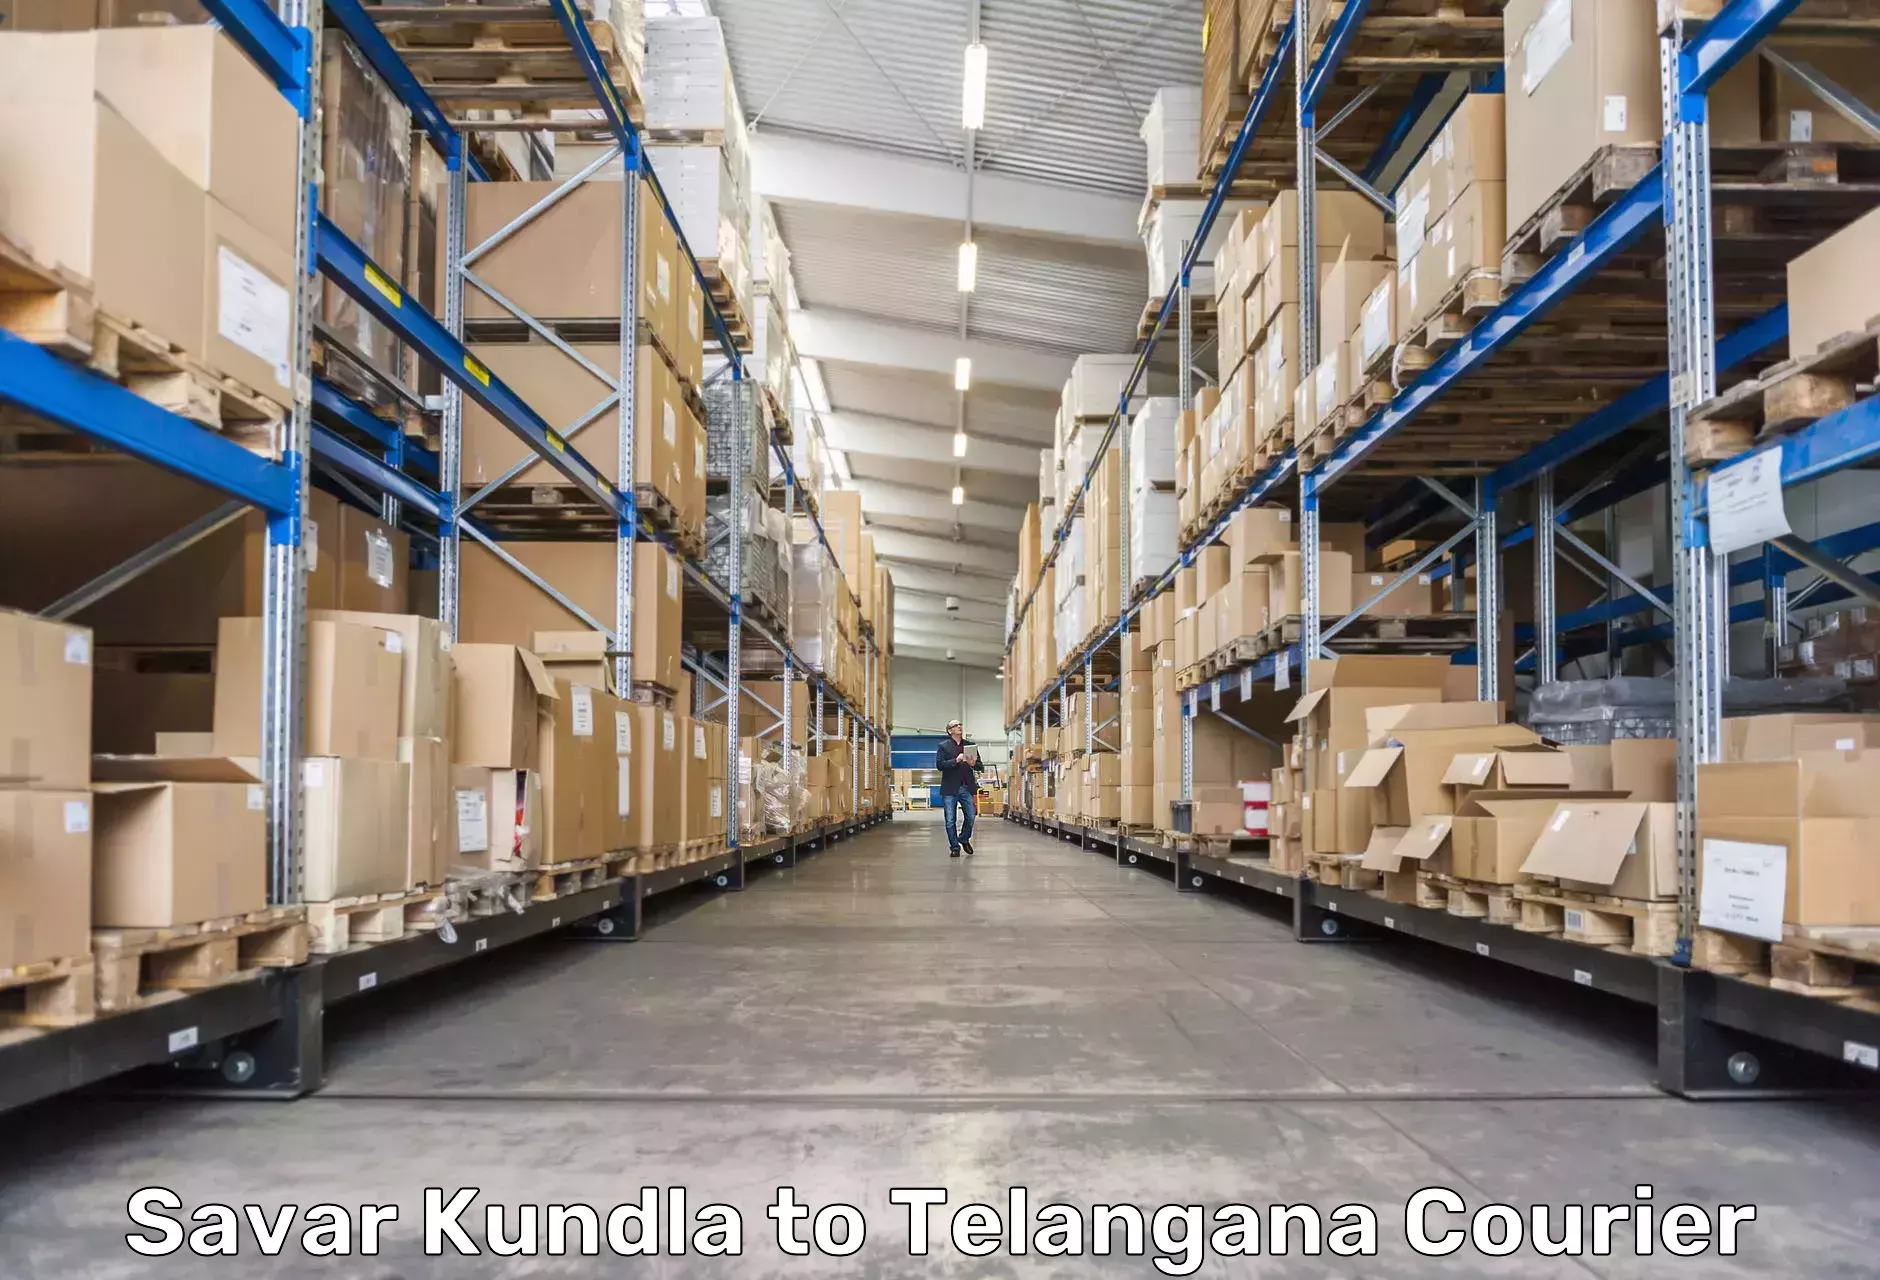 Courier service partnerships Savar Kundla to Bachupally